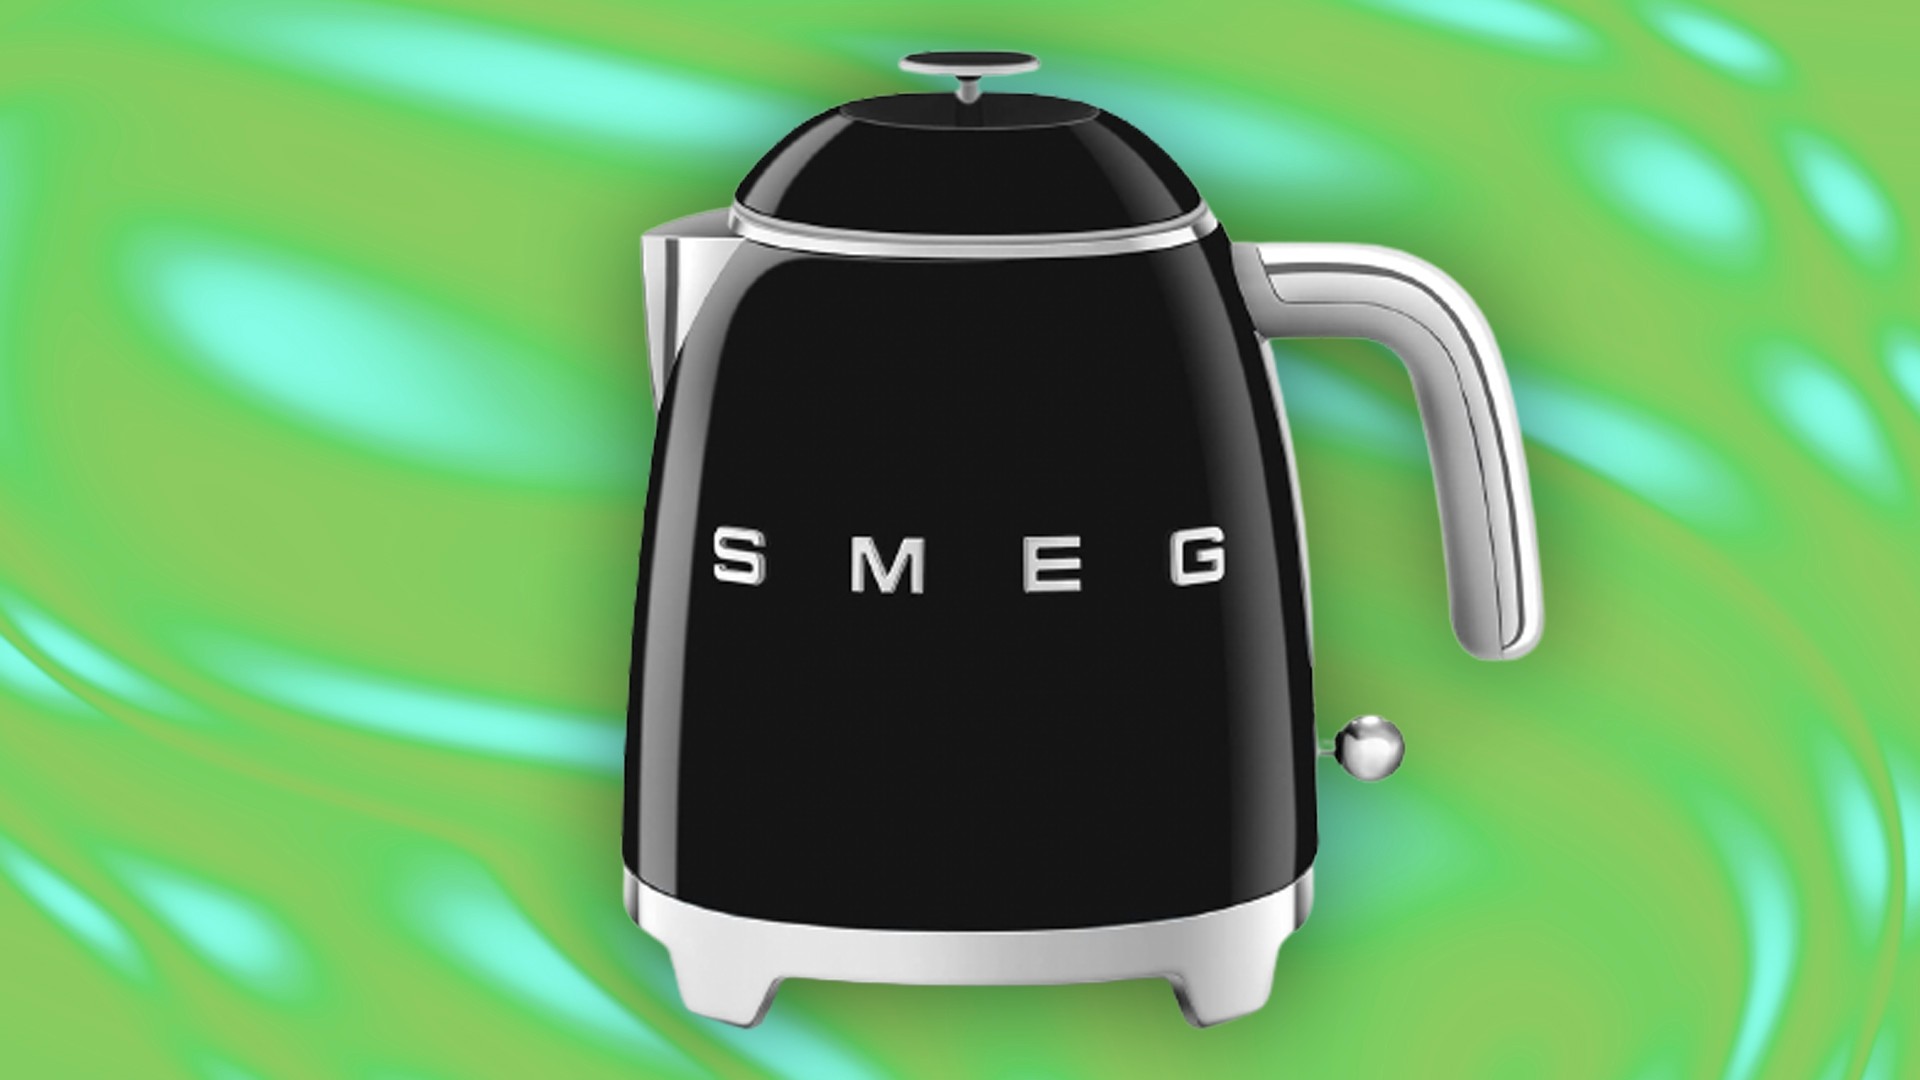 SMEG Electric Kettle – The Kitchen